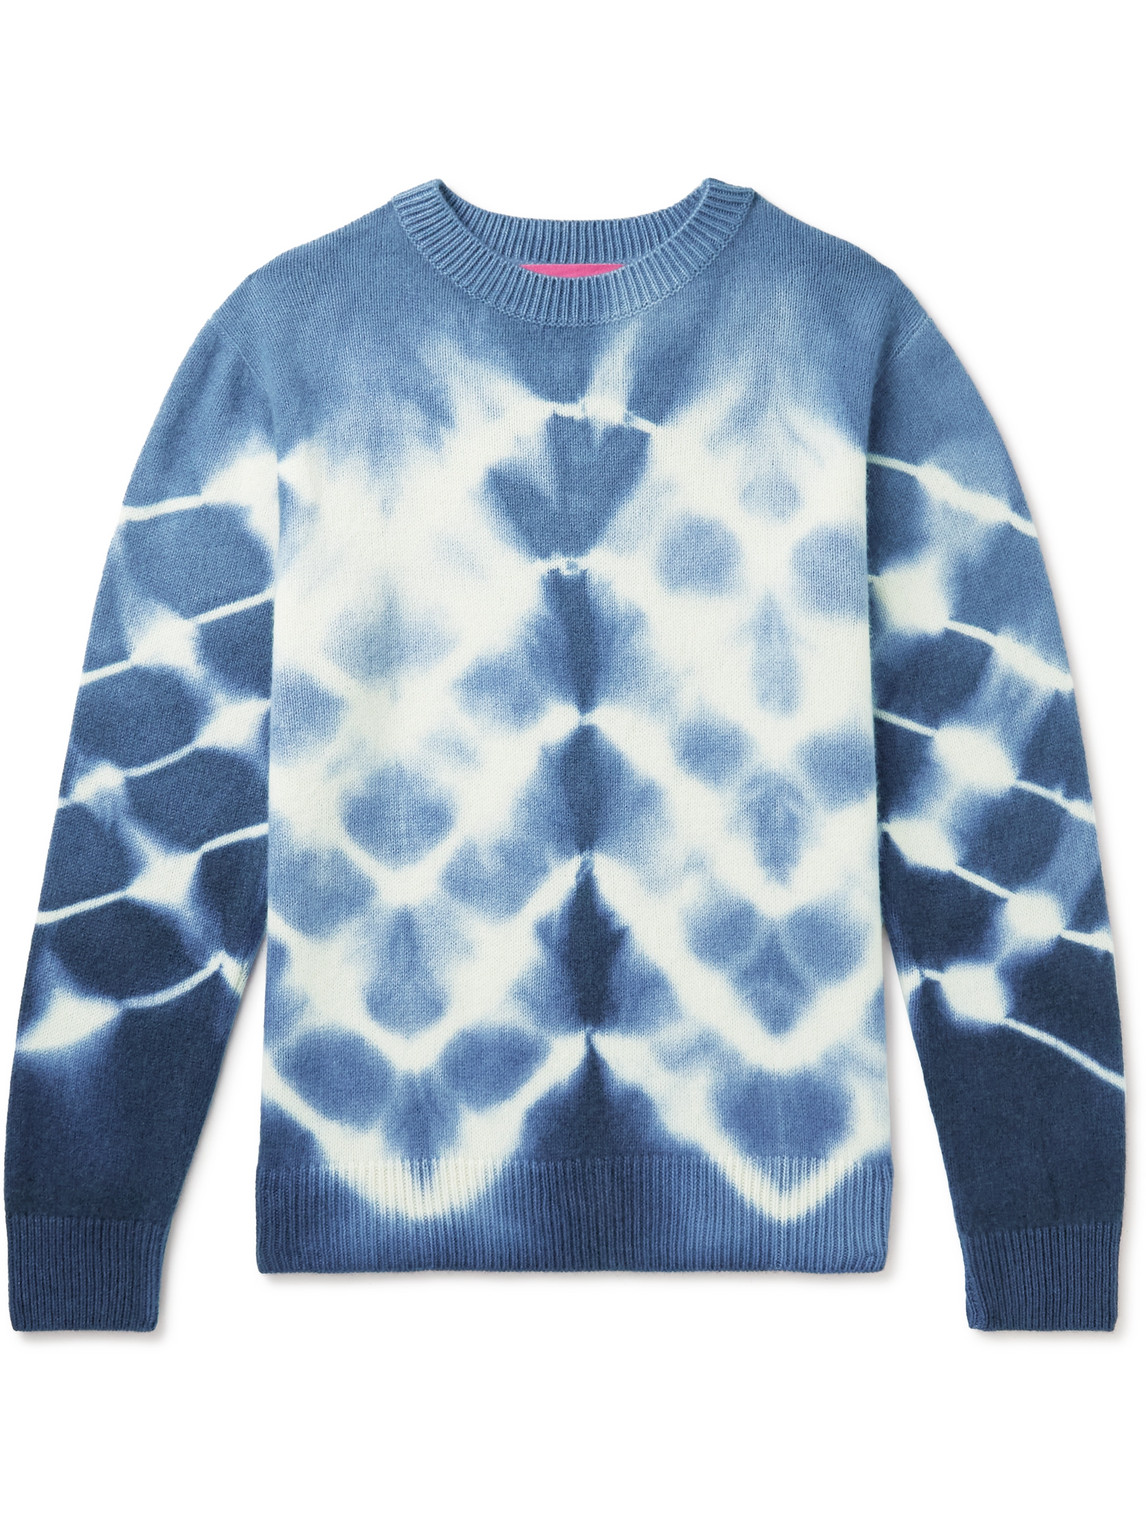 Wavey Tie-Dyed Cashmere Sweater